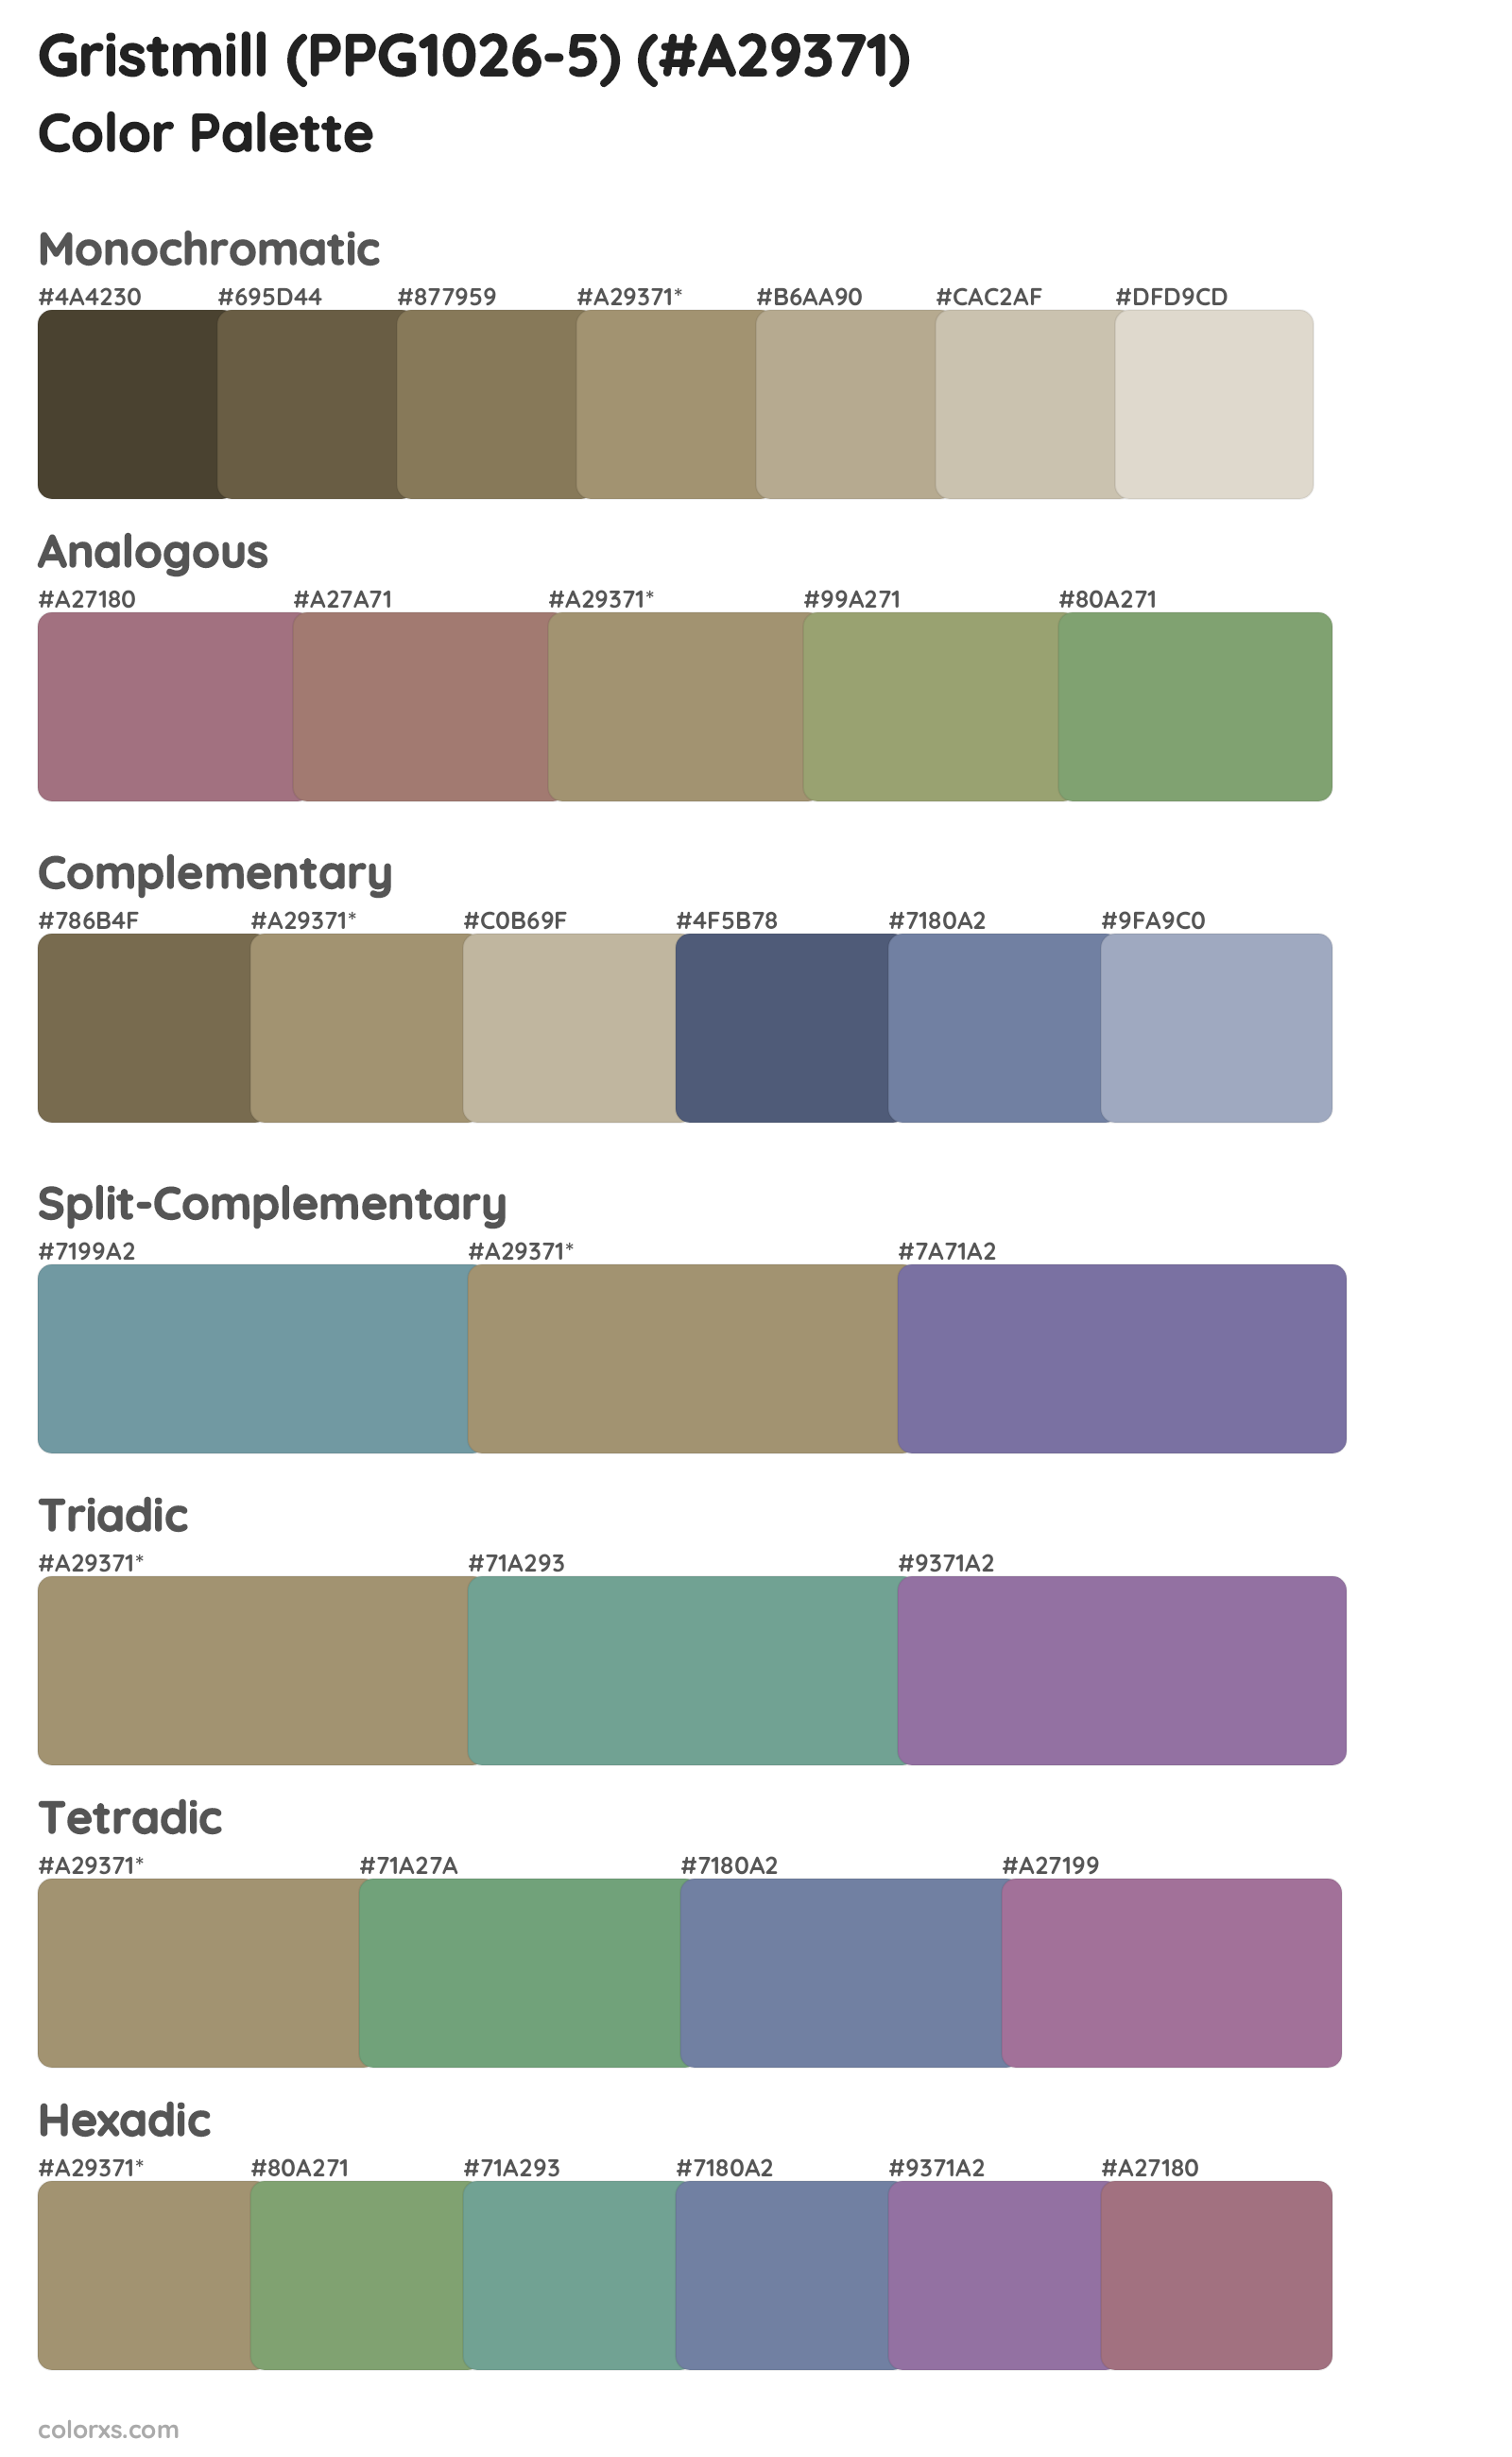 Gristmill (PPG1026-5) Color Scheme Palettes